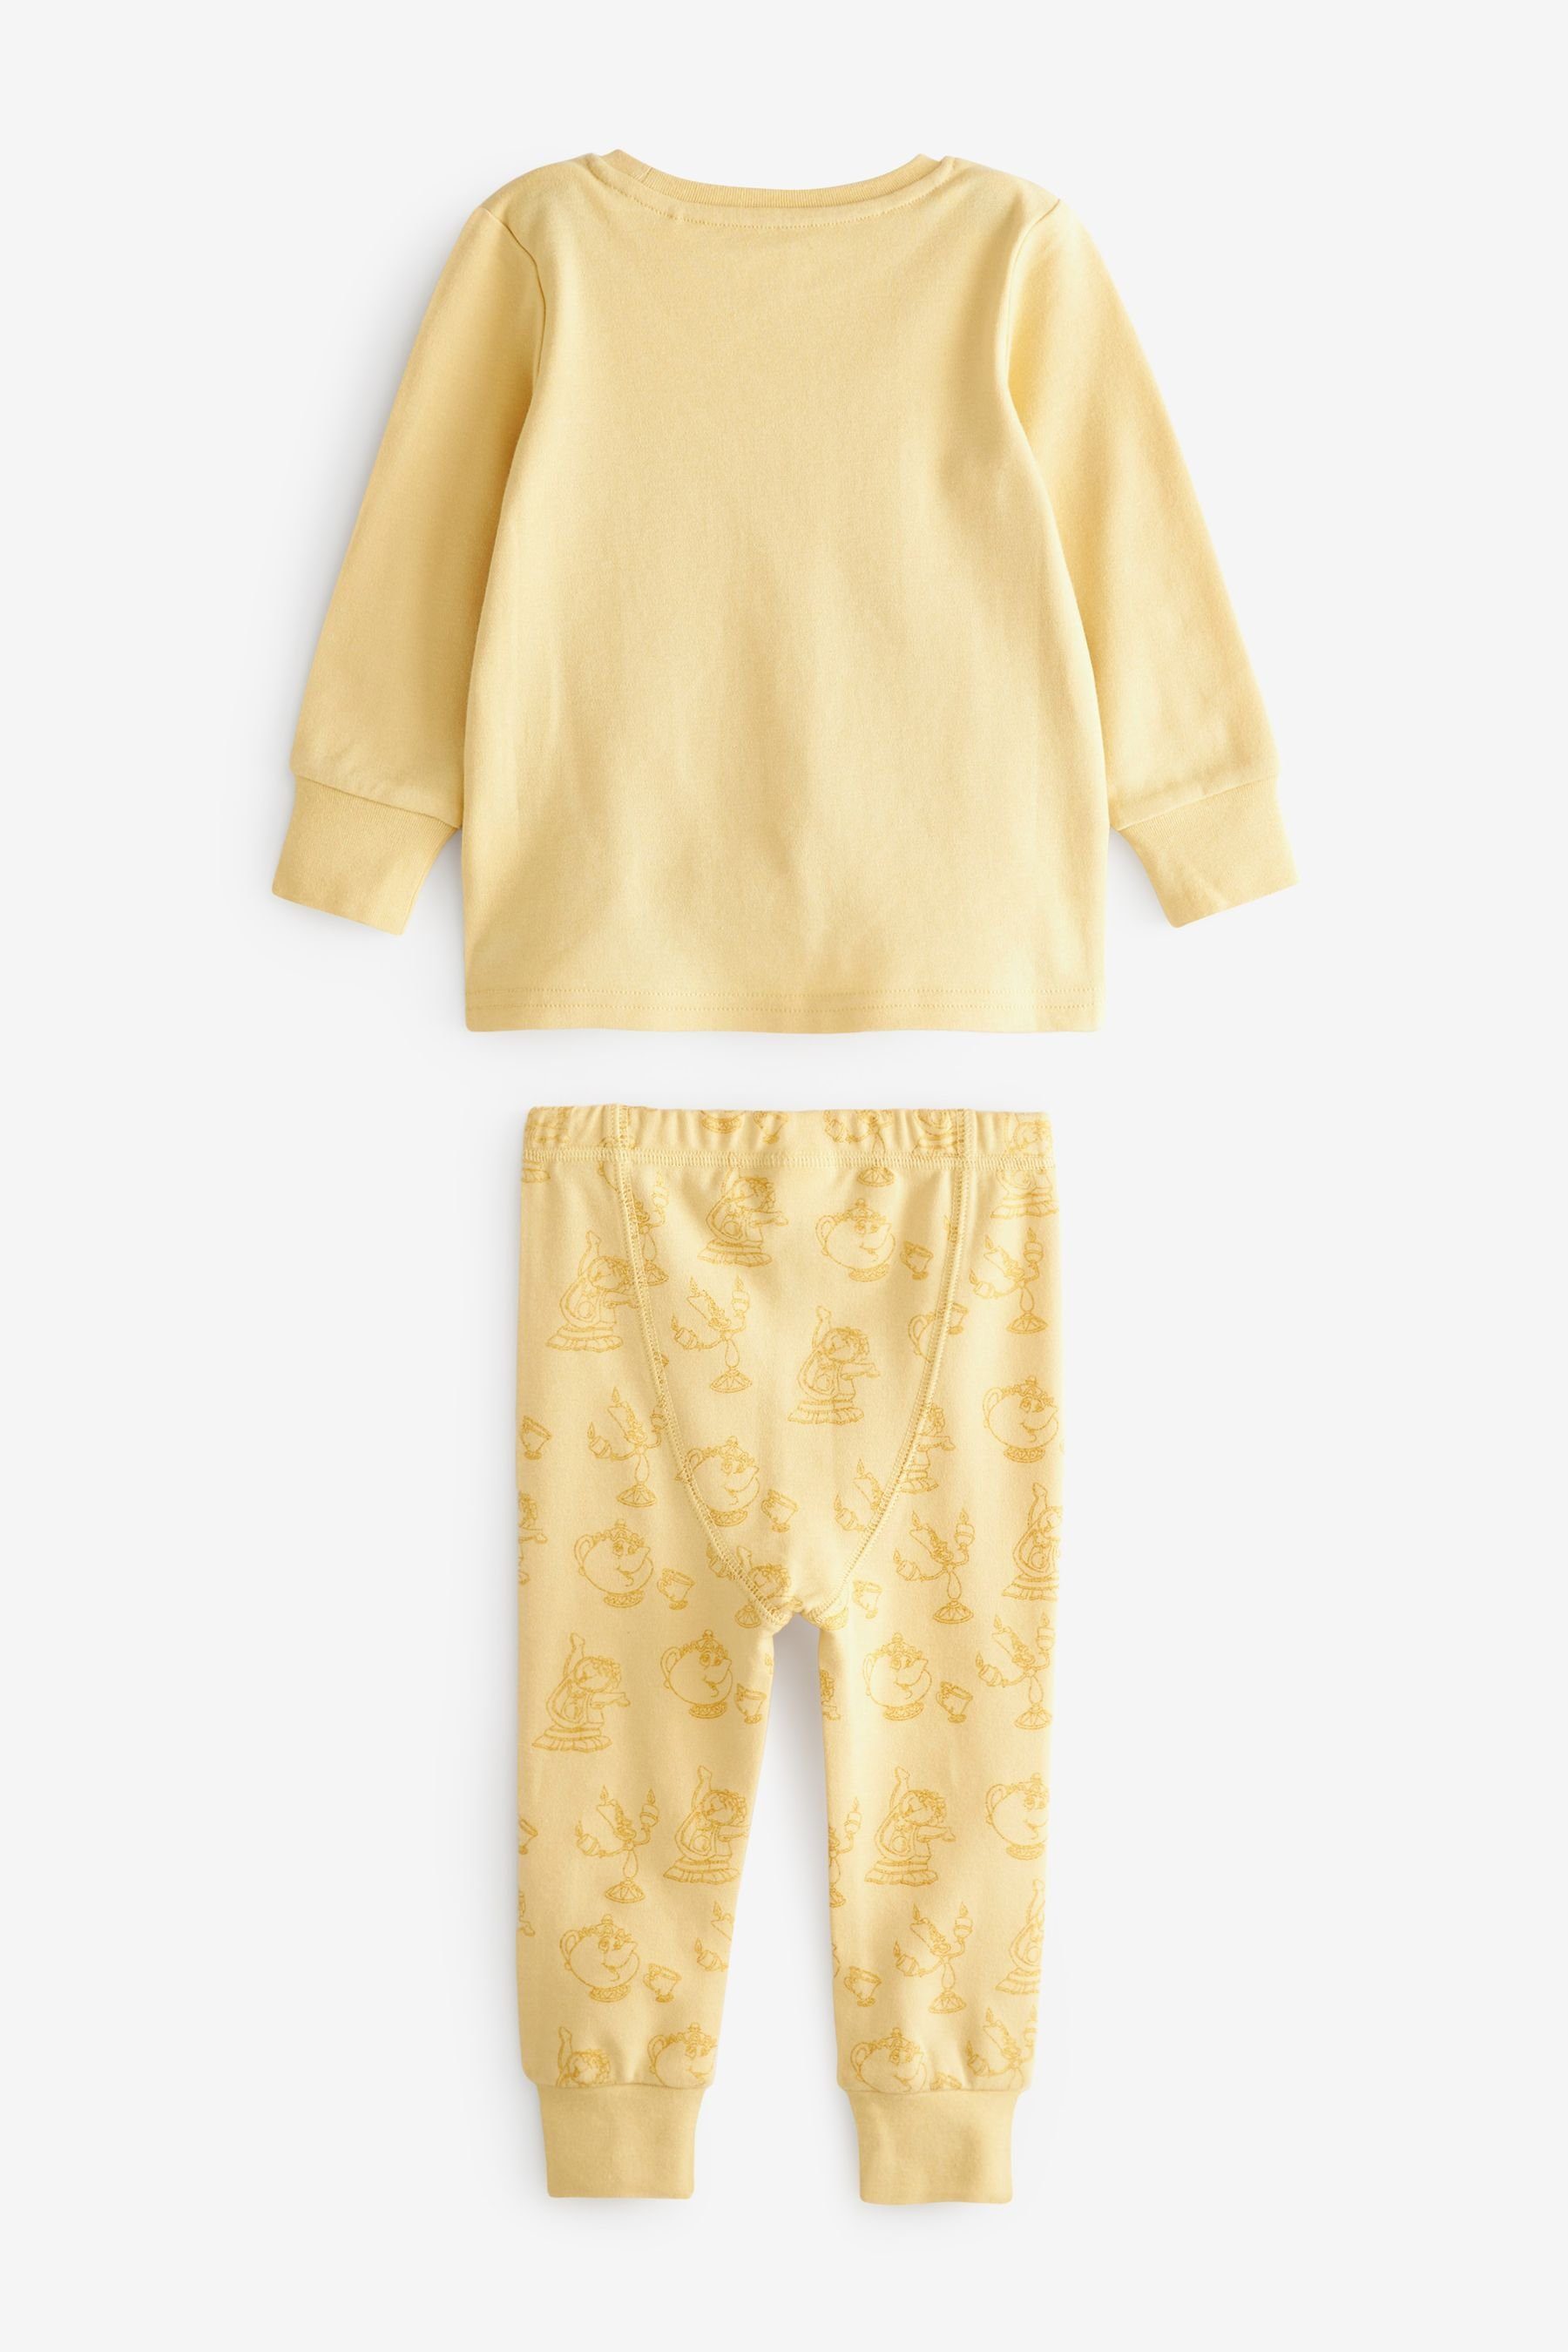 Yellow Disney Next tlg) Princess Pyjama (2 Pyjama, Belle Kuscheliger 1er-Pack